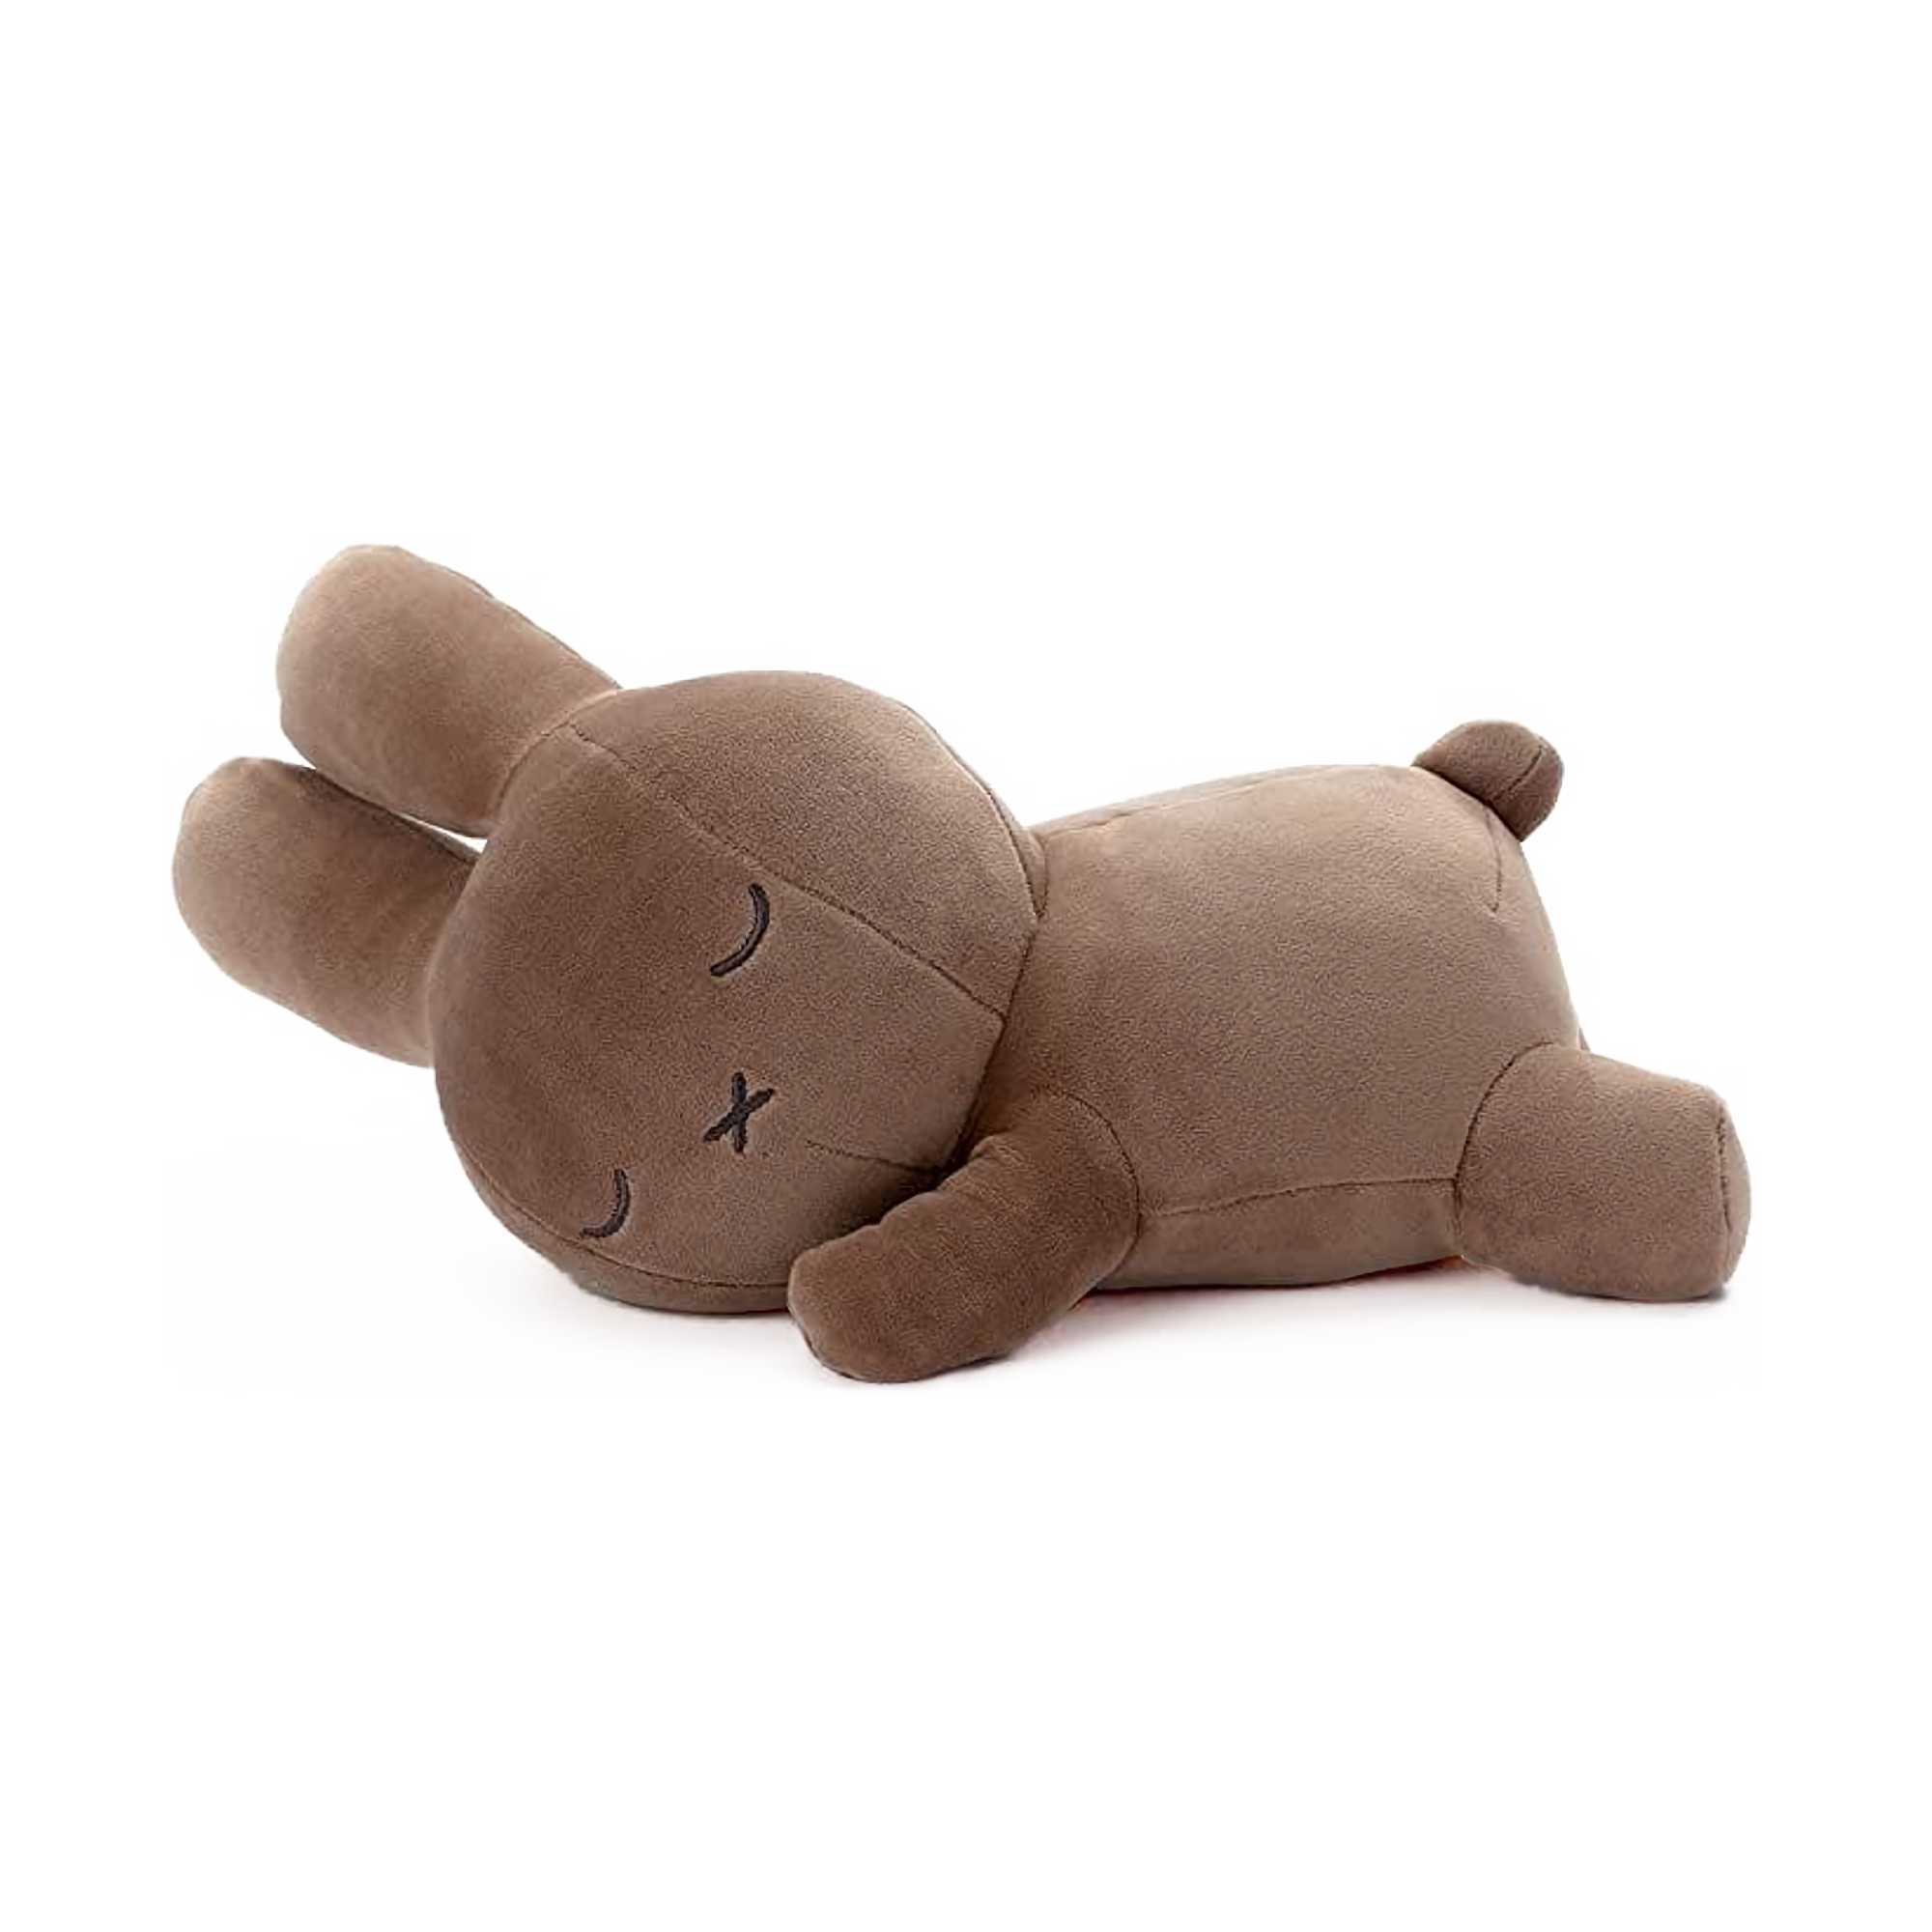 Miffy Sleeping Friend Plush Toy Small (19cm), Brown